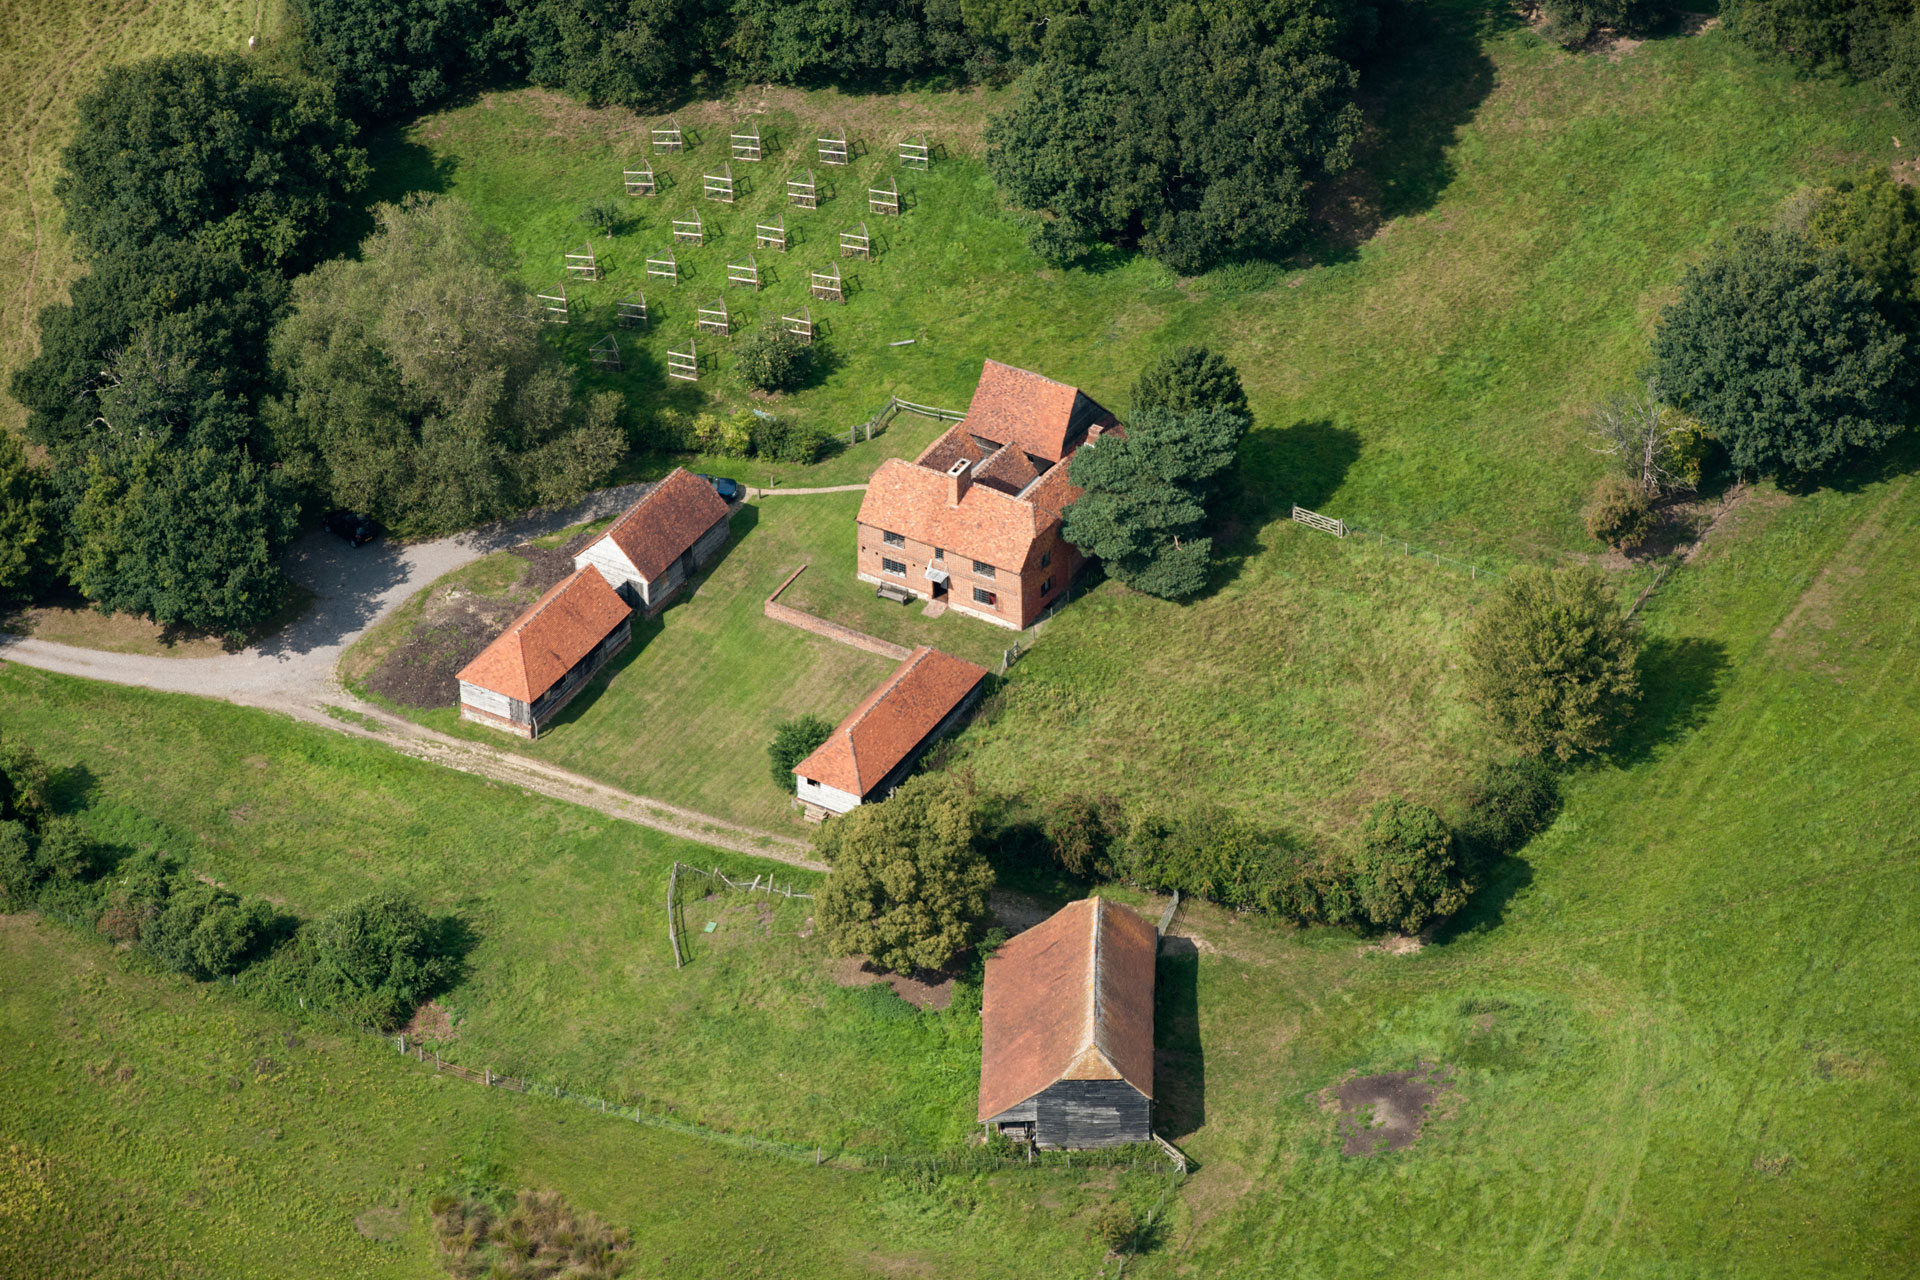 Aerial view of farm buildings.